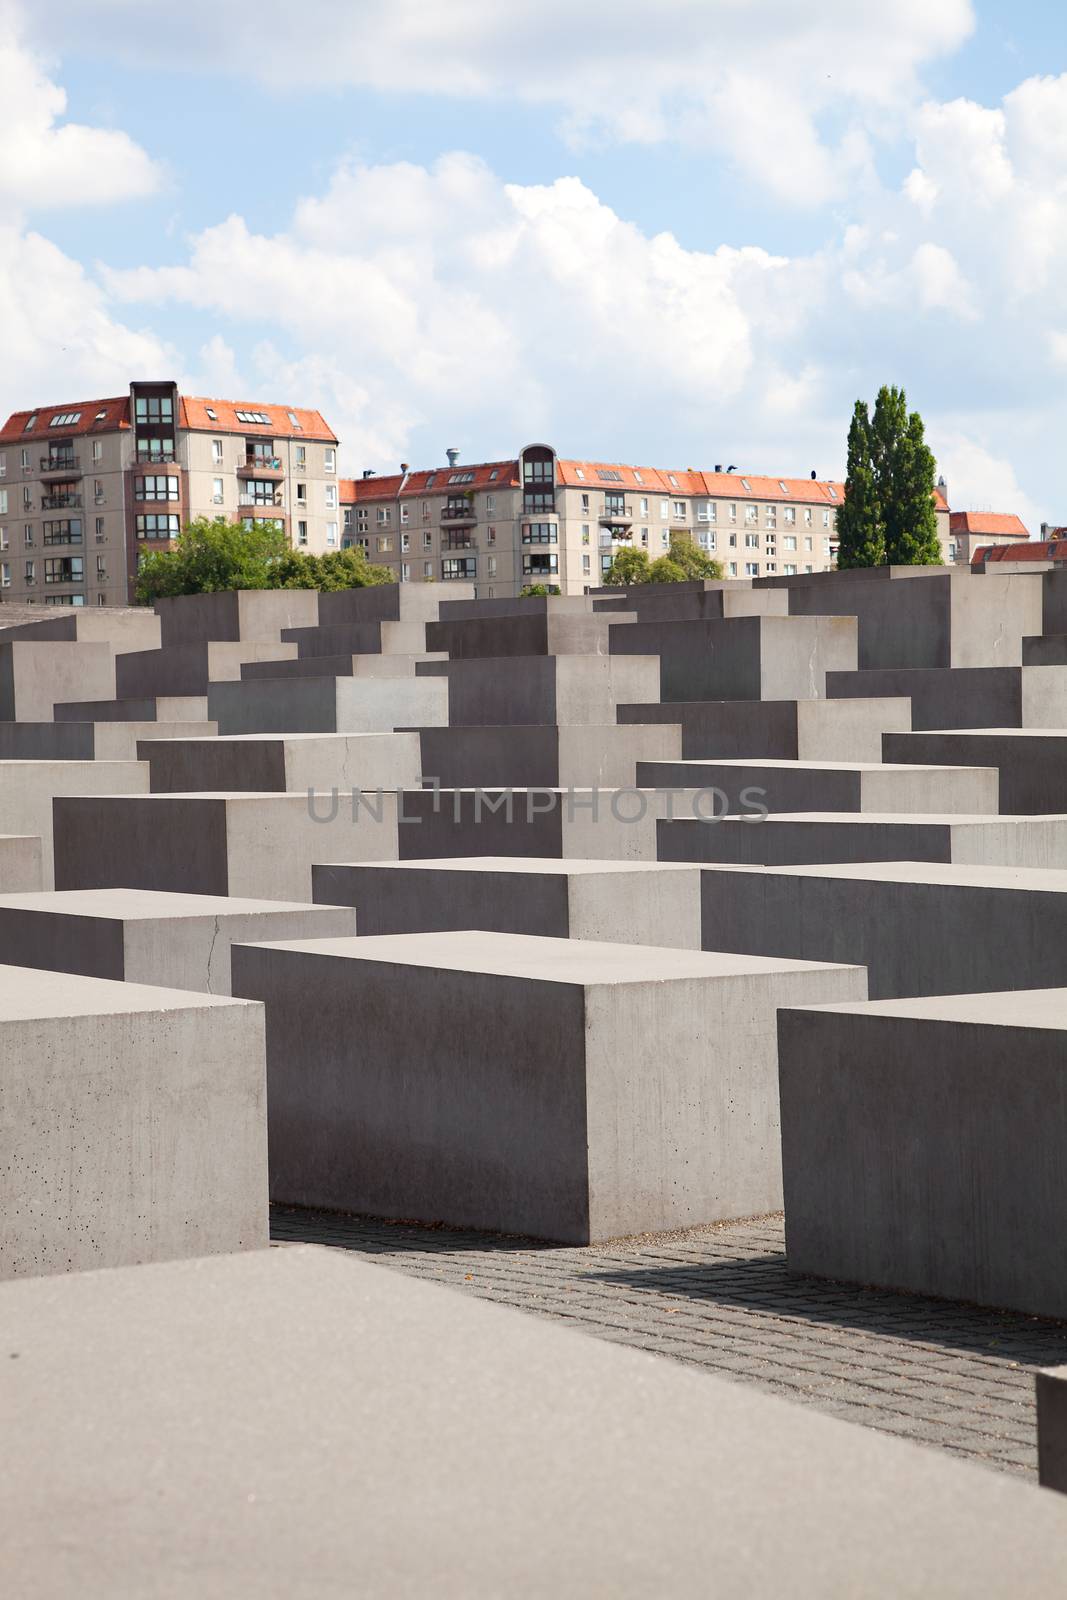 the holocaust memorial site in Berlin by motorolka